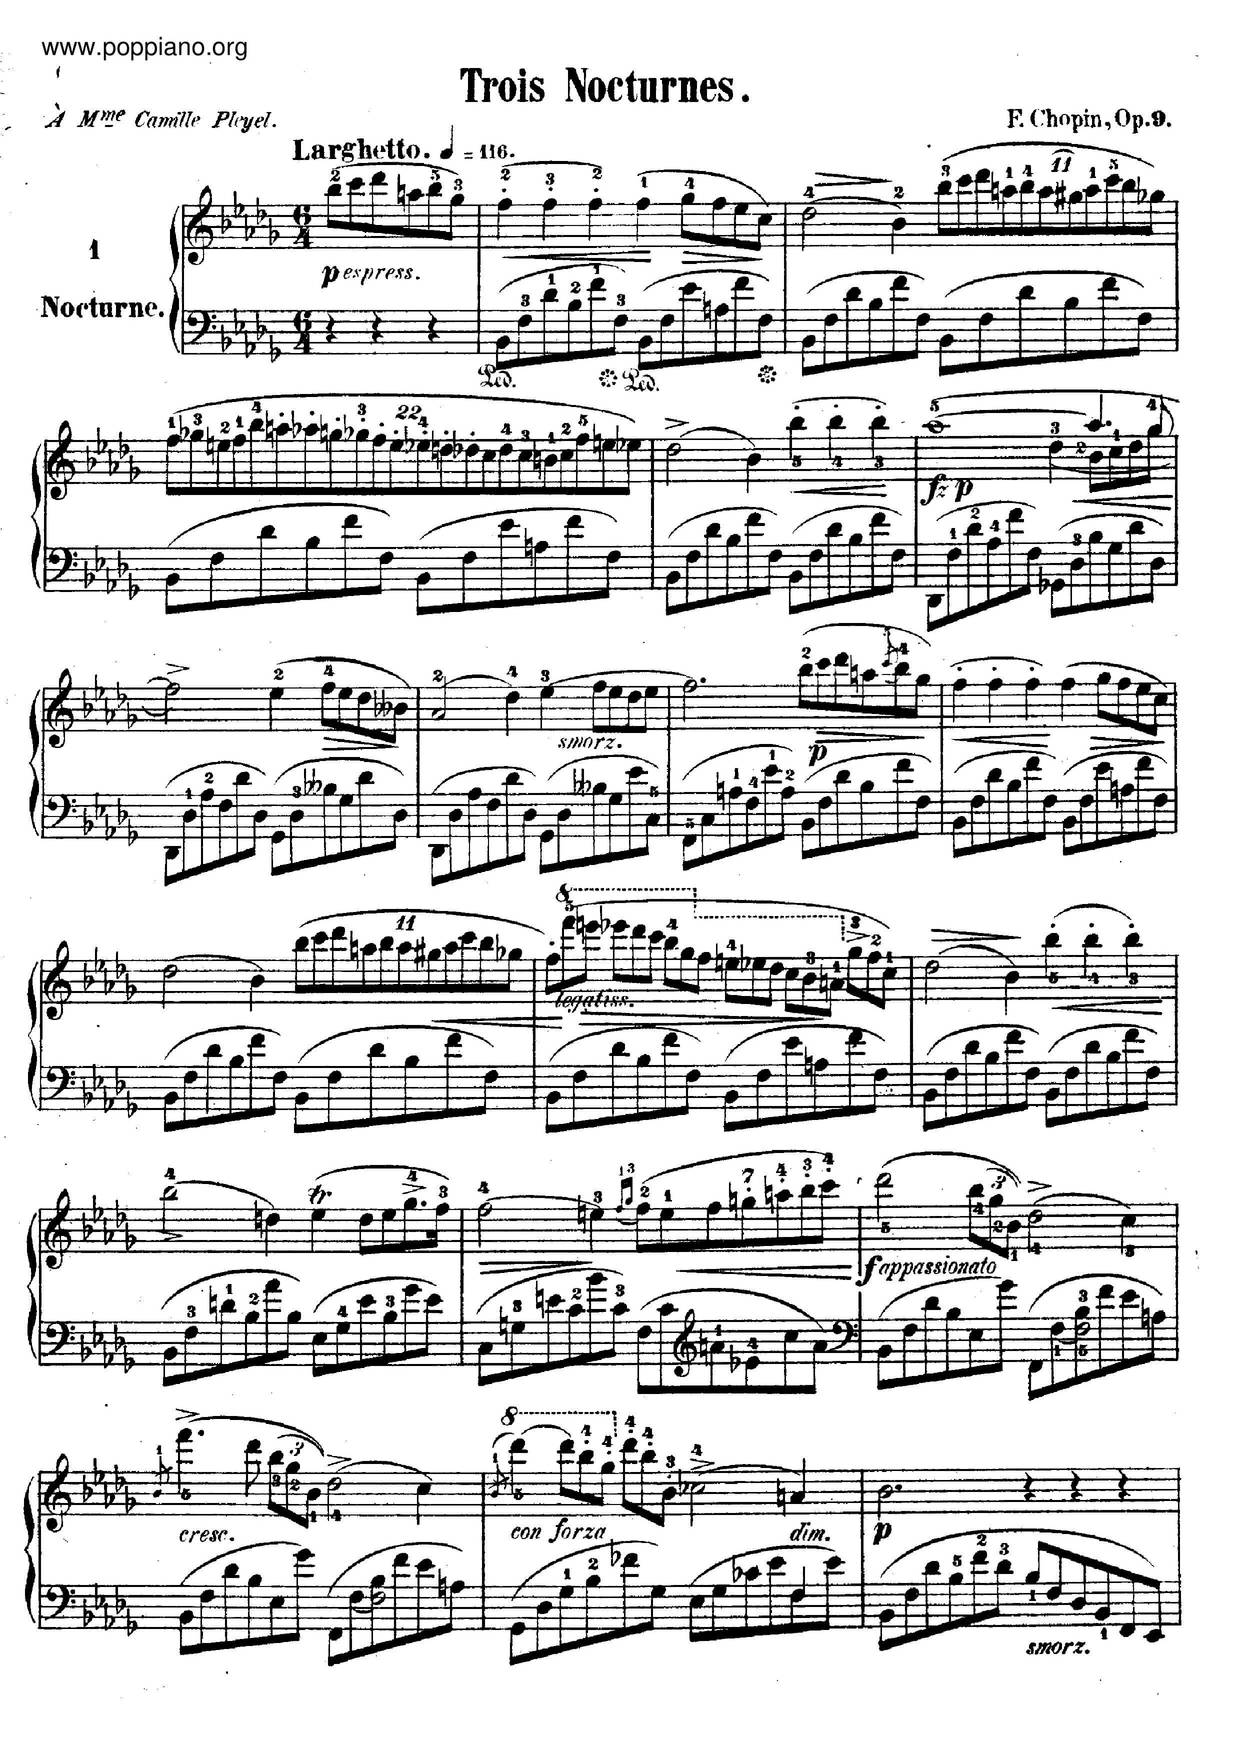 Nocturne Op. 9 No. 1 in B flat minorピアノ譜